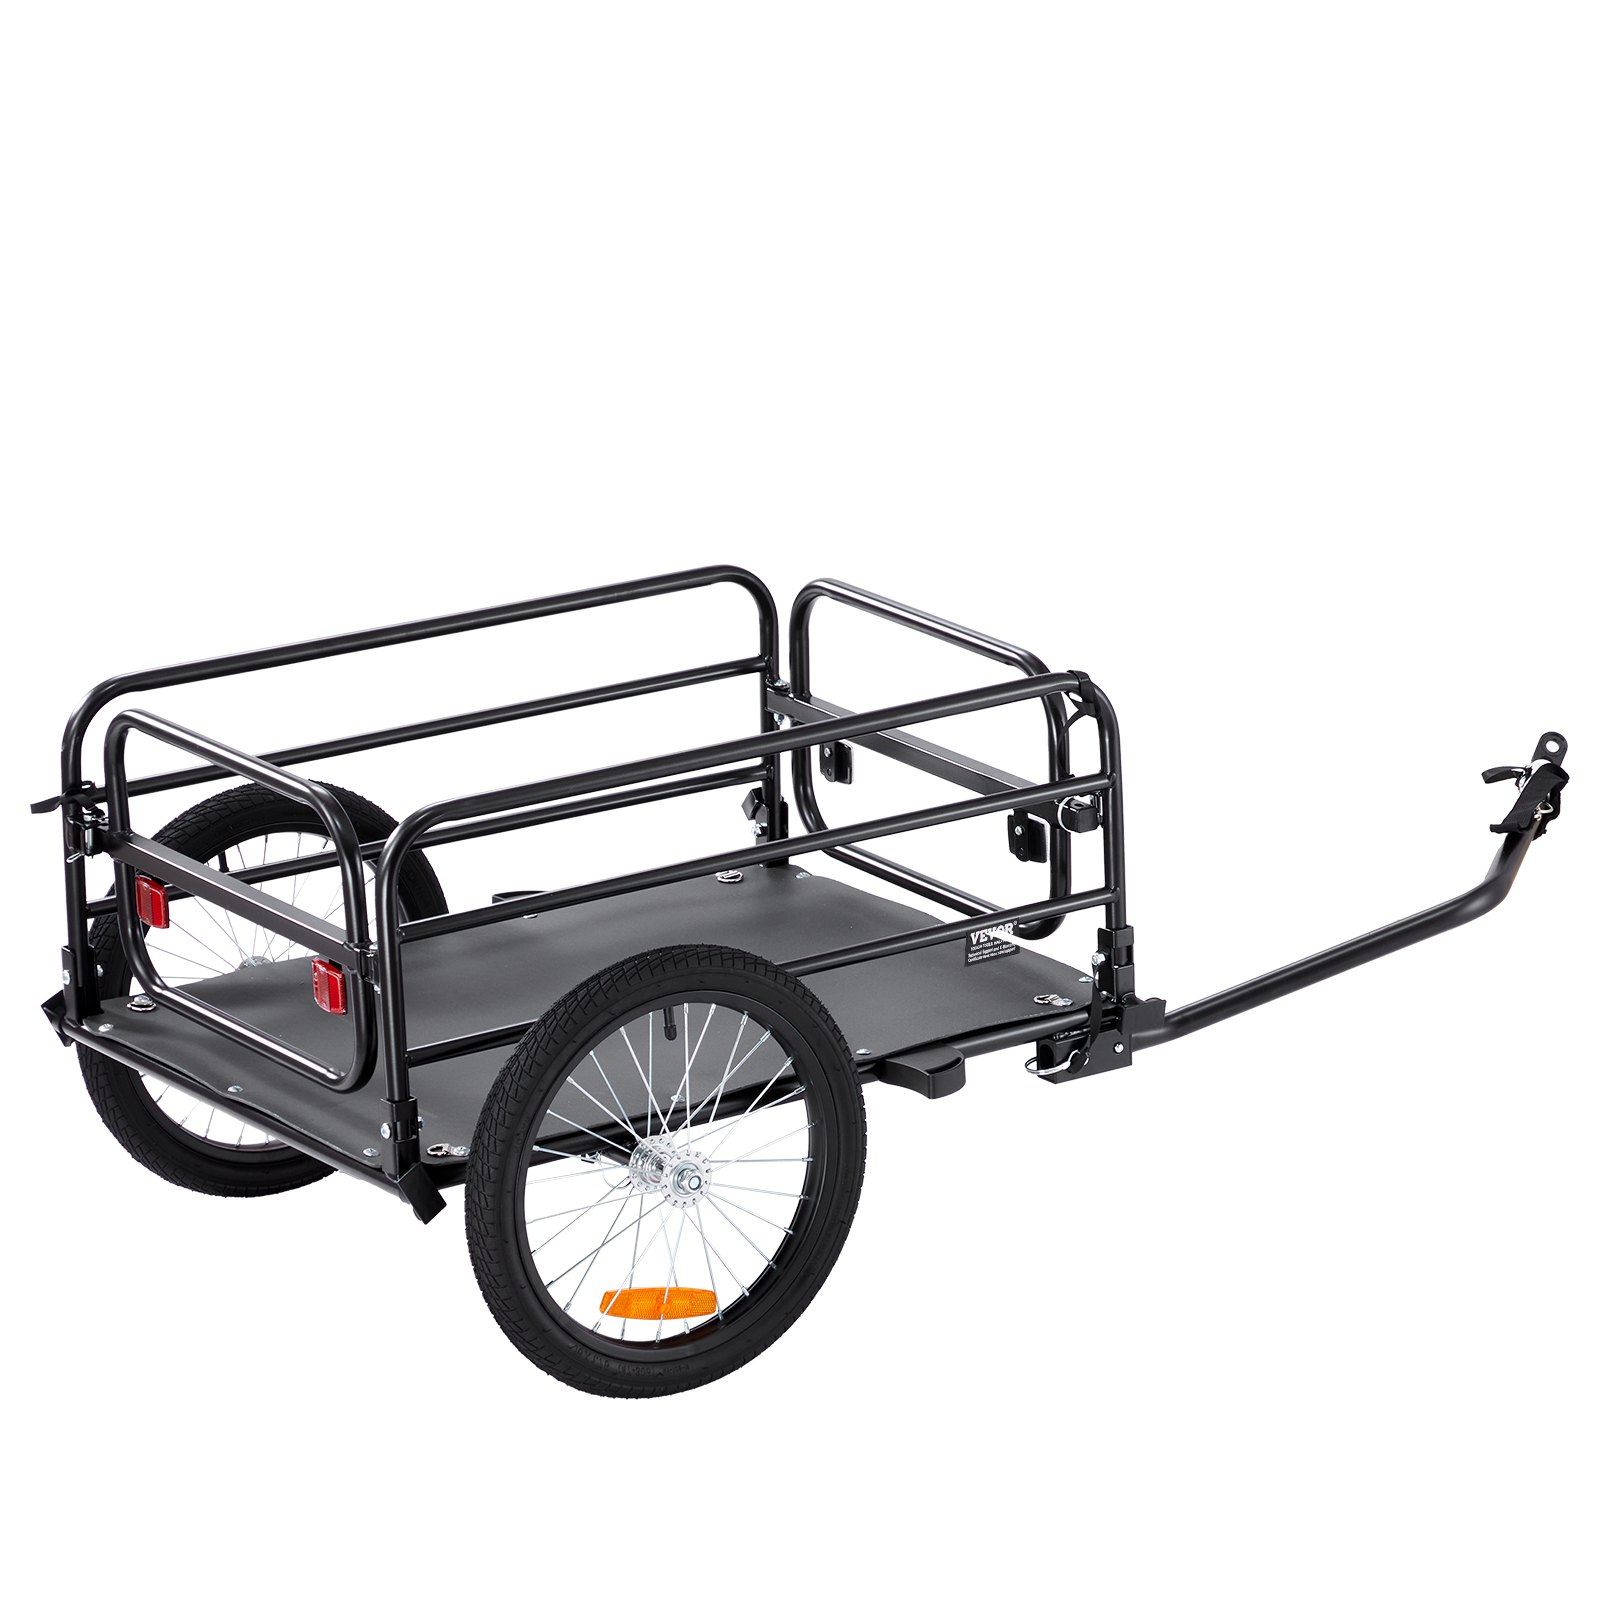 VEVOR Bike Cargo Trailer, Heavy-Duty Bicycle Wagon Cart, 160 lbs Load Capacity, Goodies N Stuff